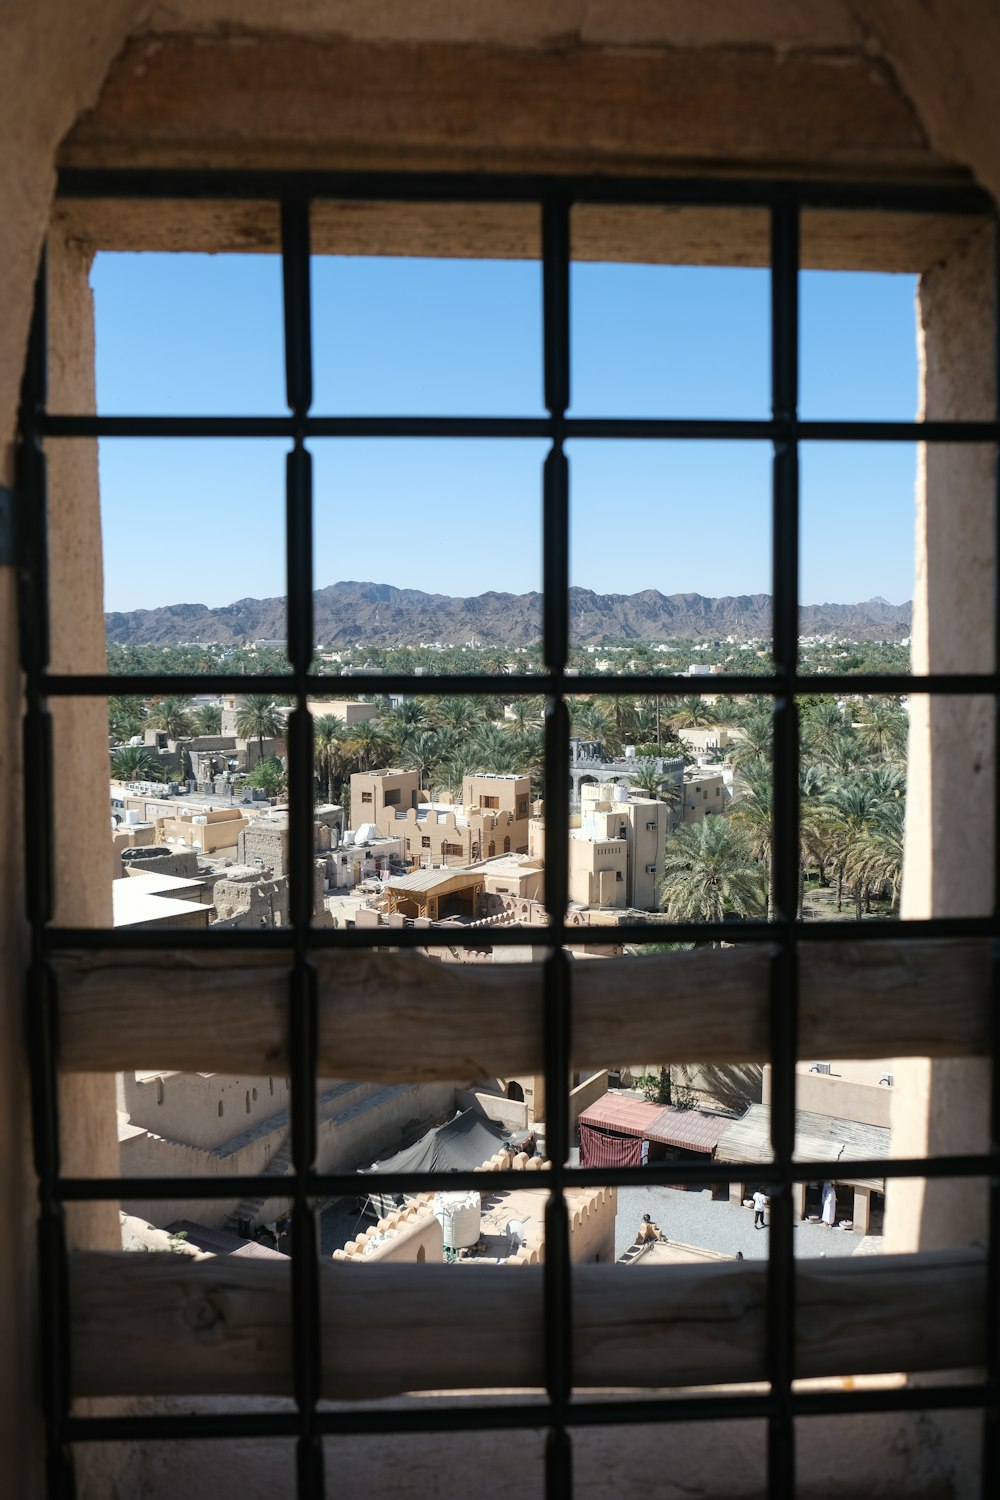 una vista di una città attraverso una finestra